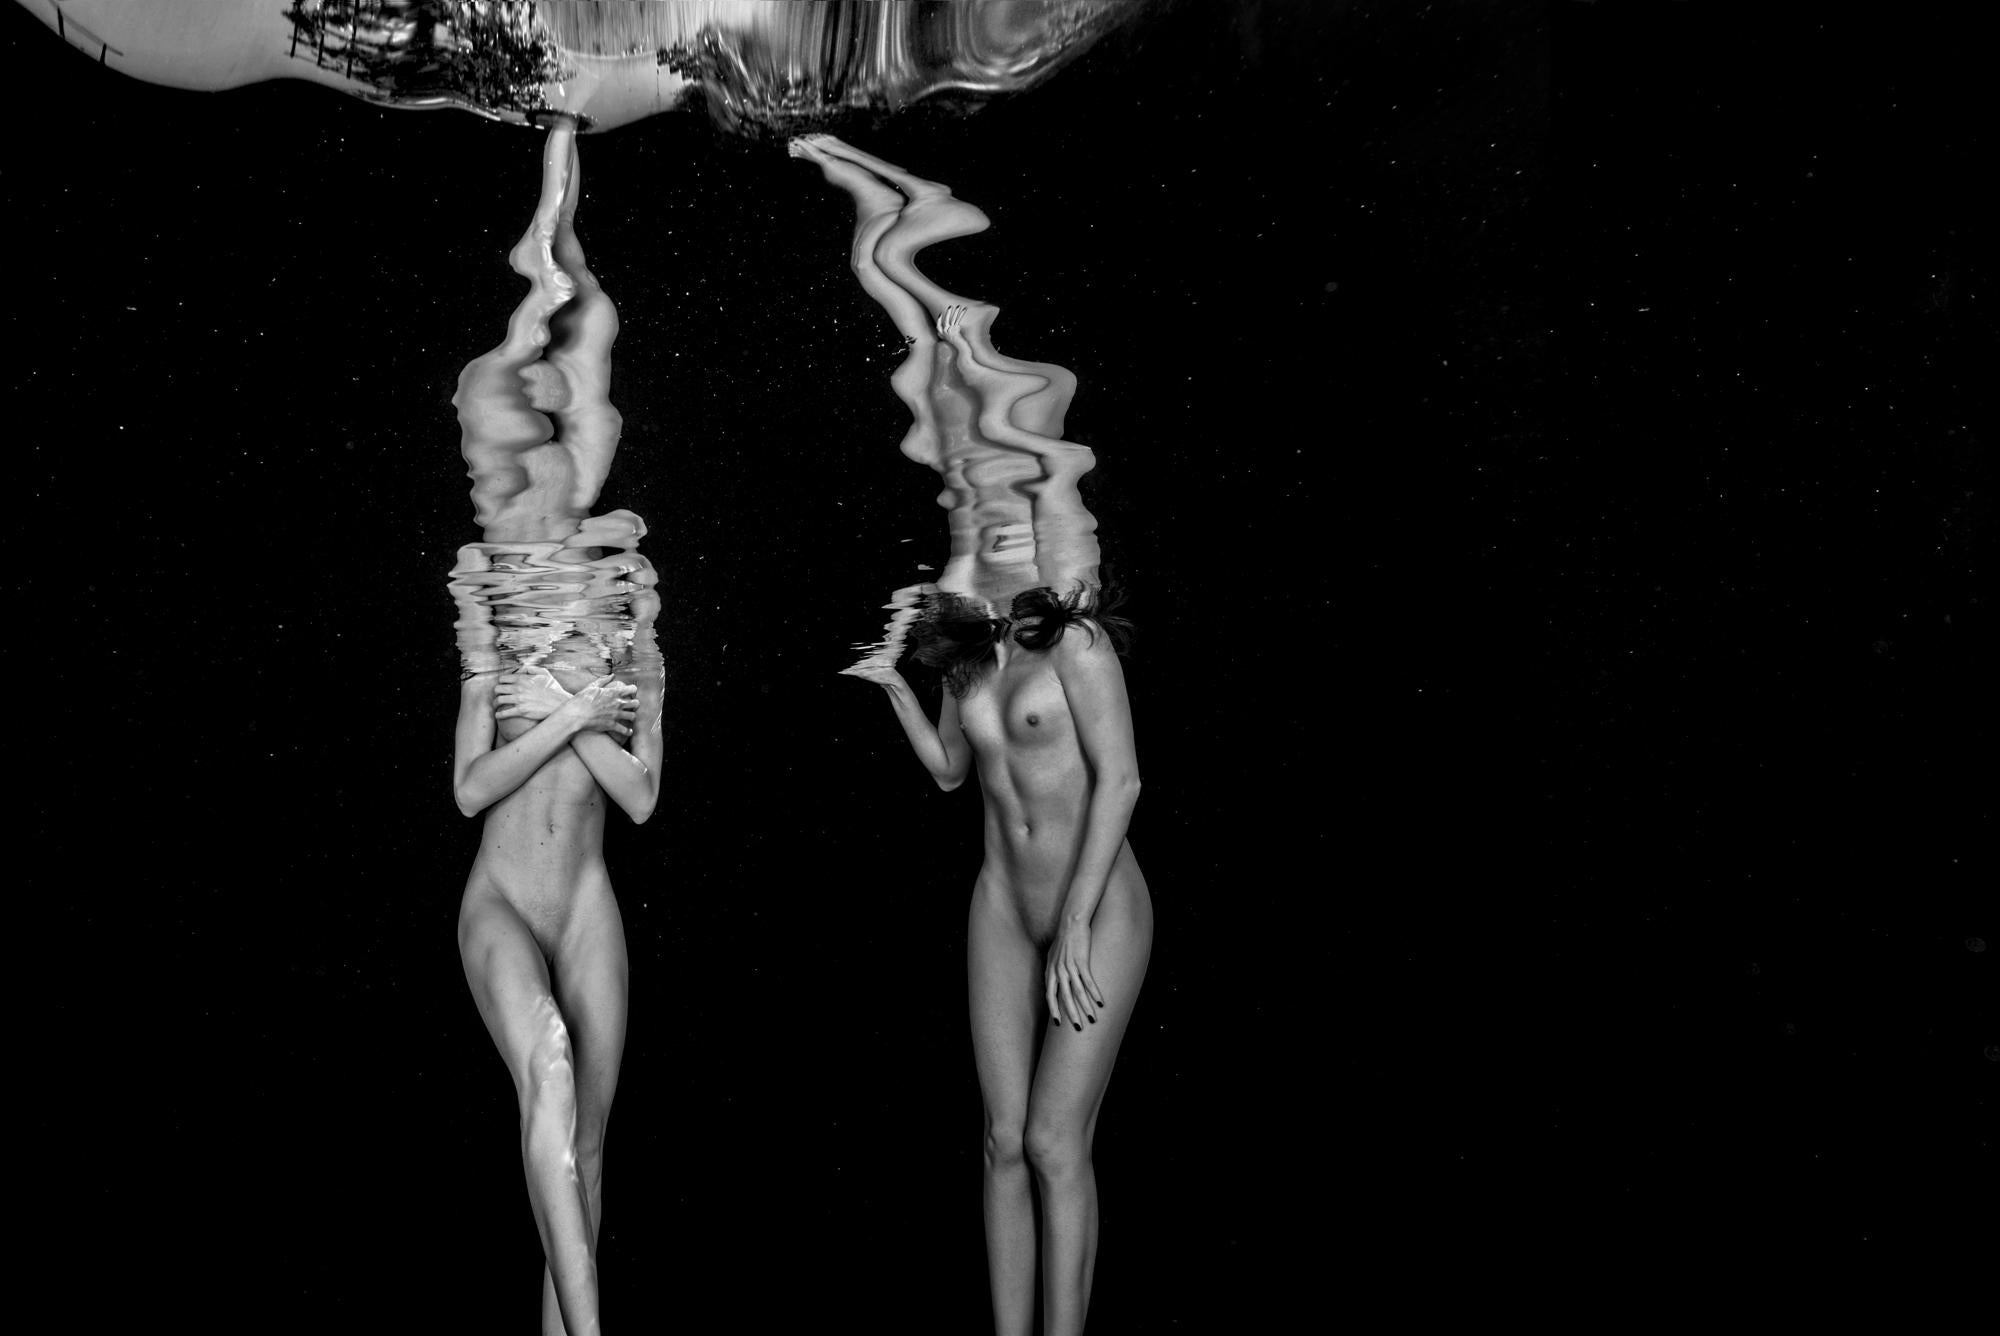 Alex Sher Black and White Photograph - Small Talk - underwater black & white nude photograph - archival pigment 16x24"